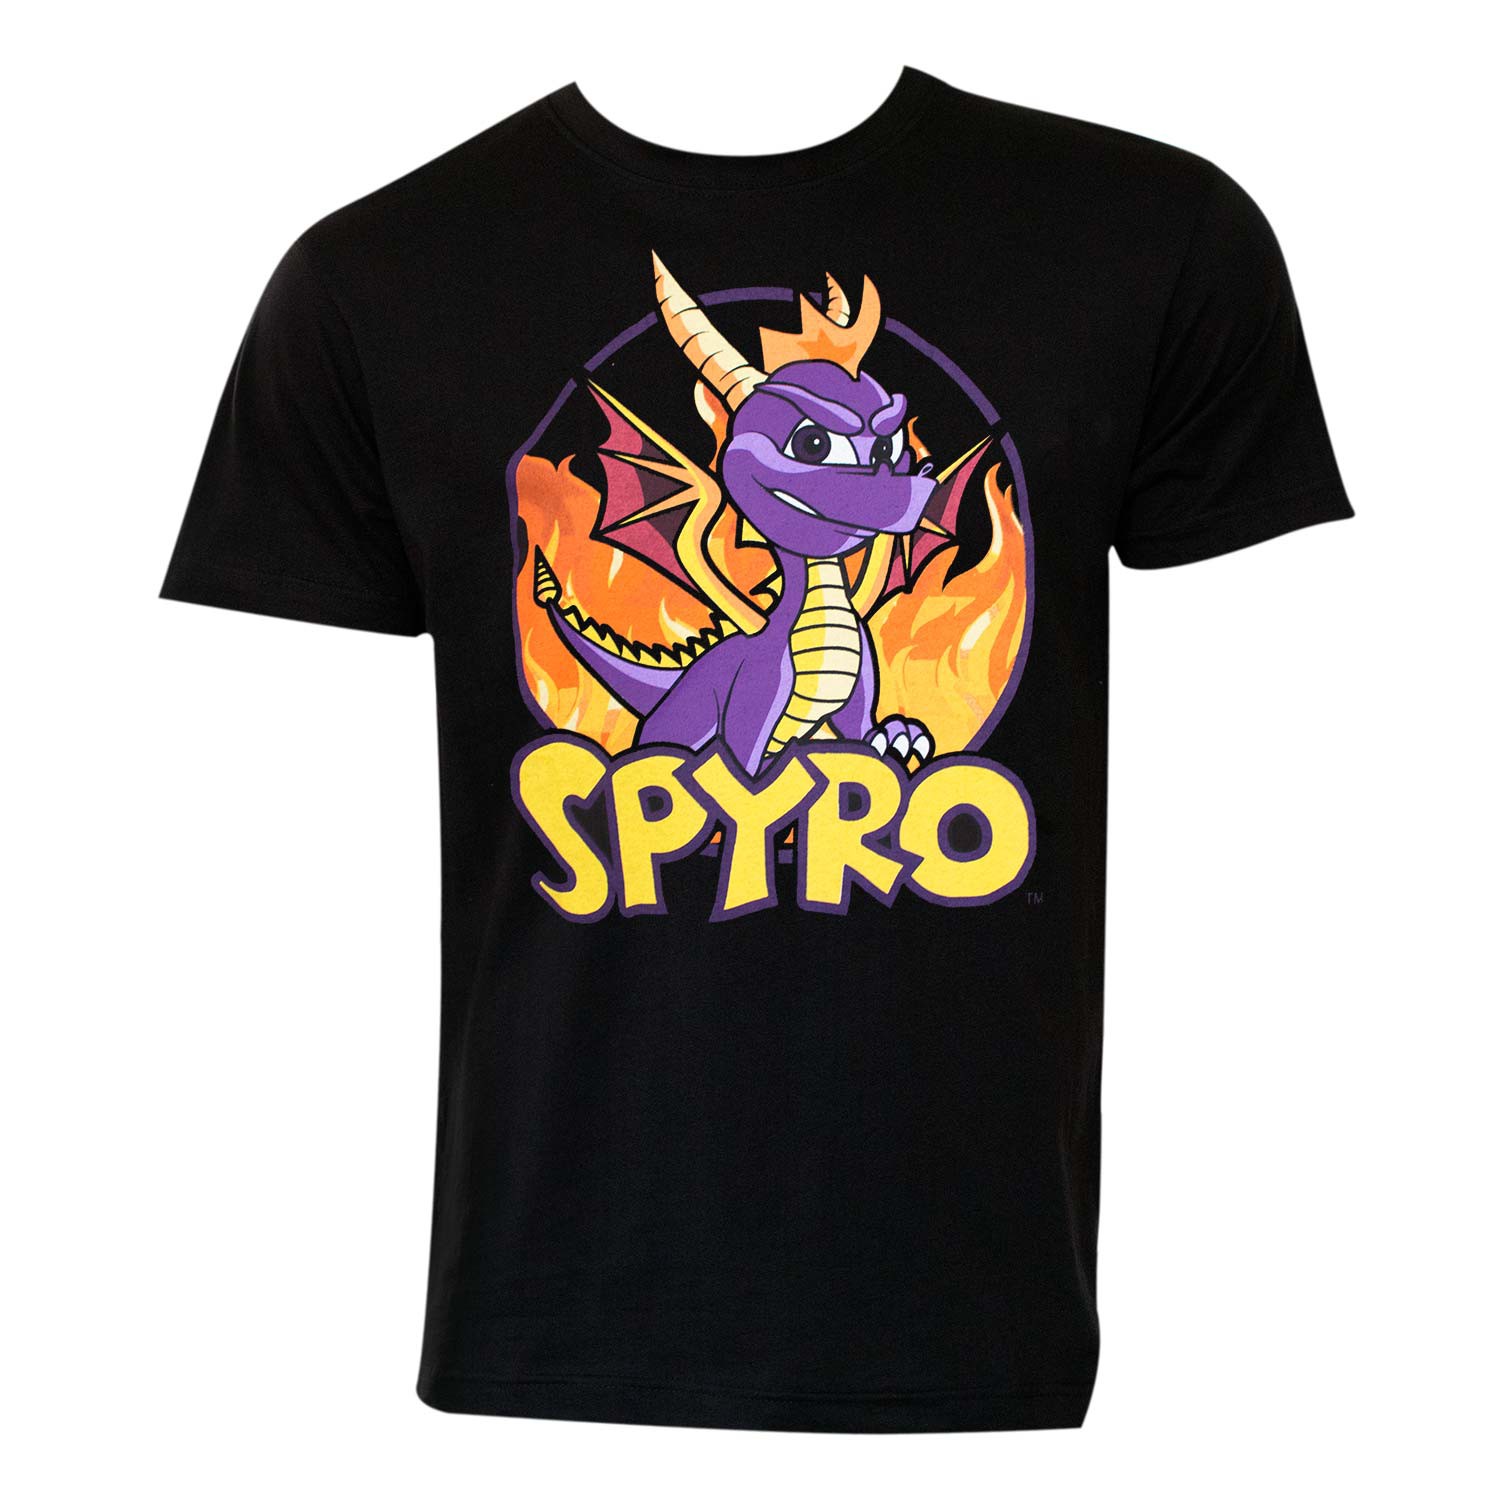 Spyro The Dragon Black Tee Shirt